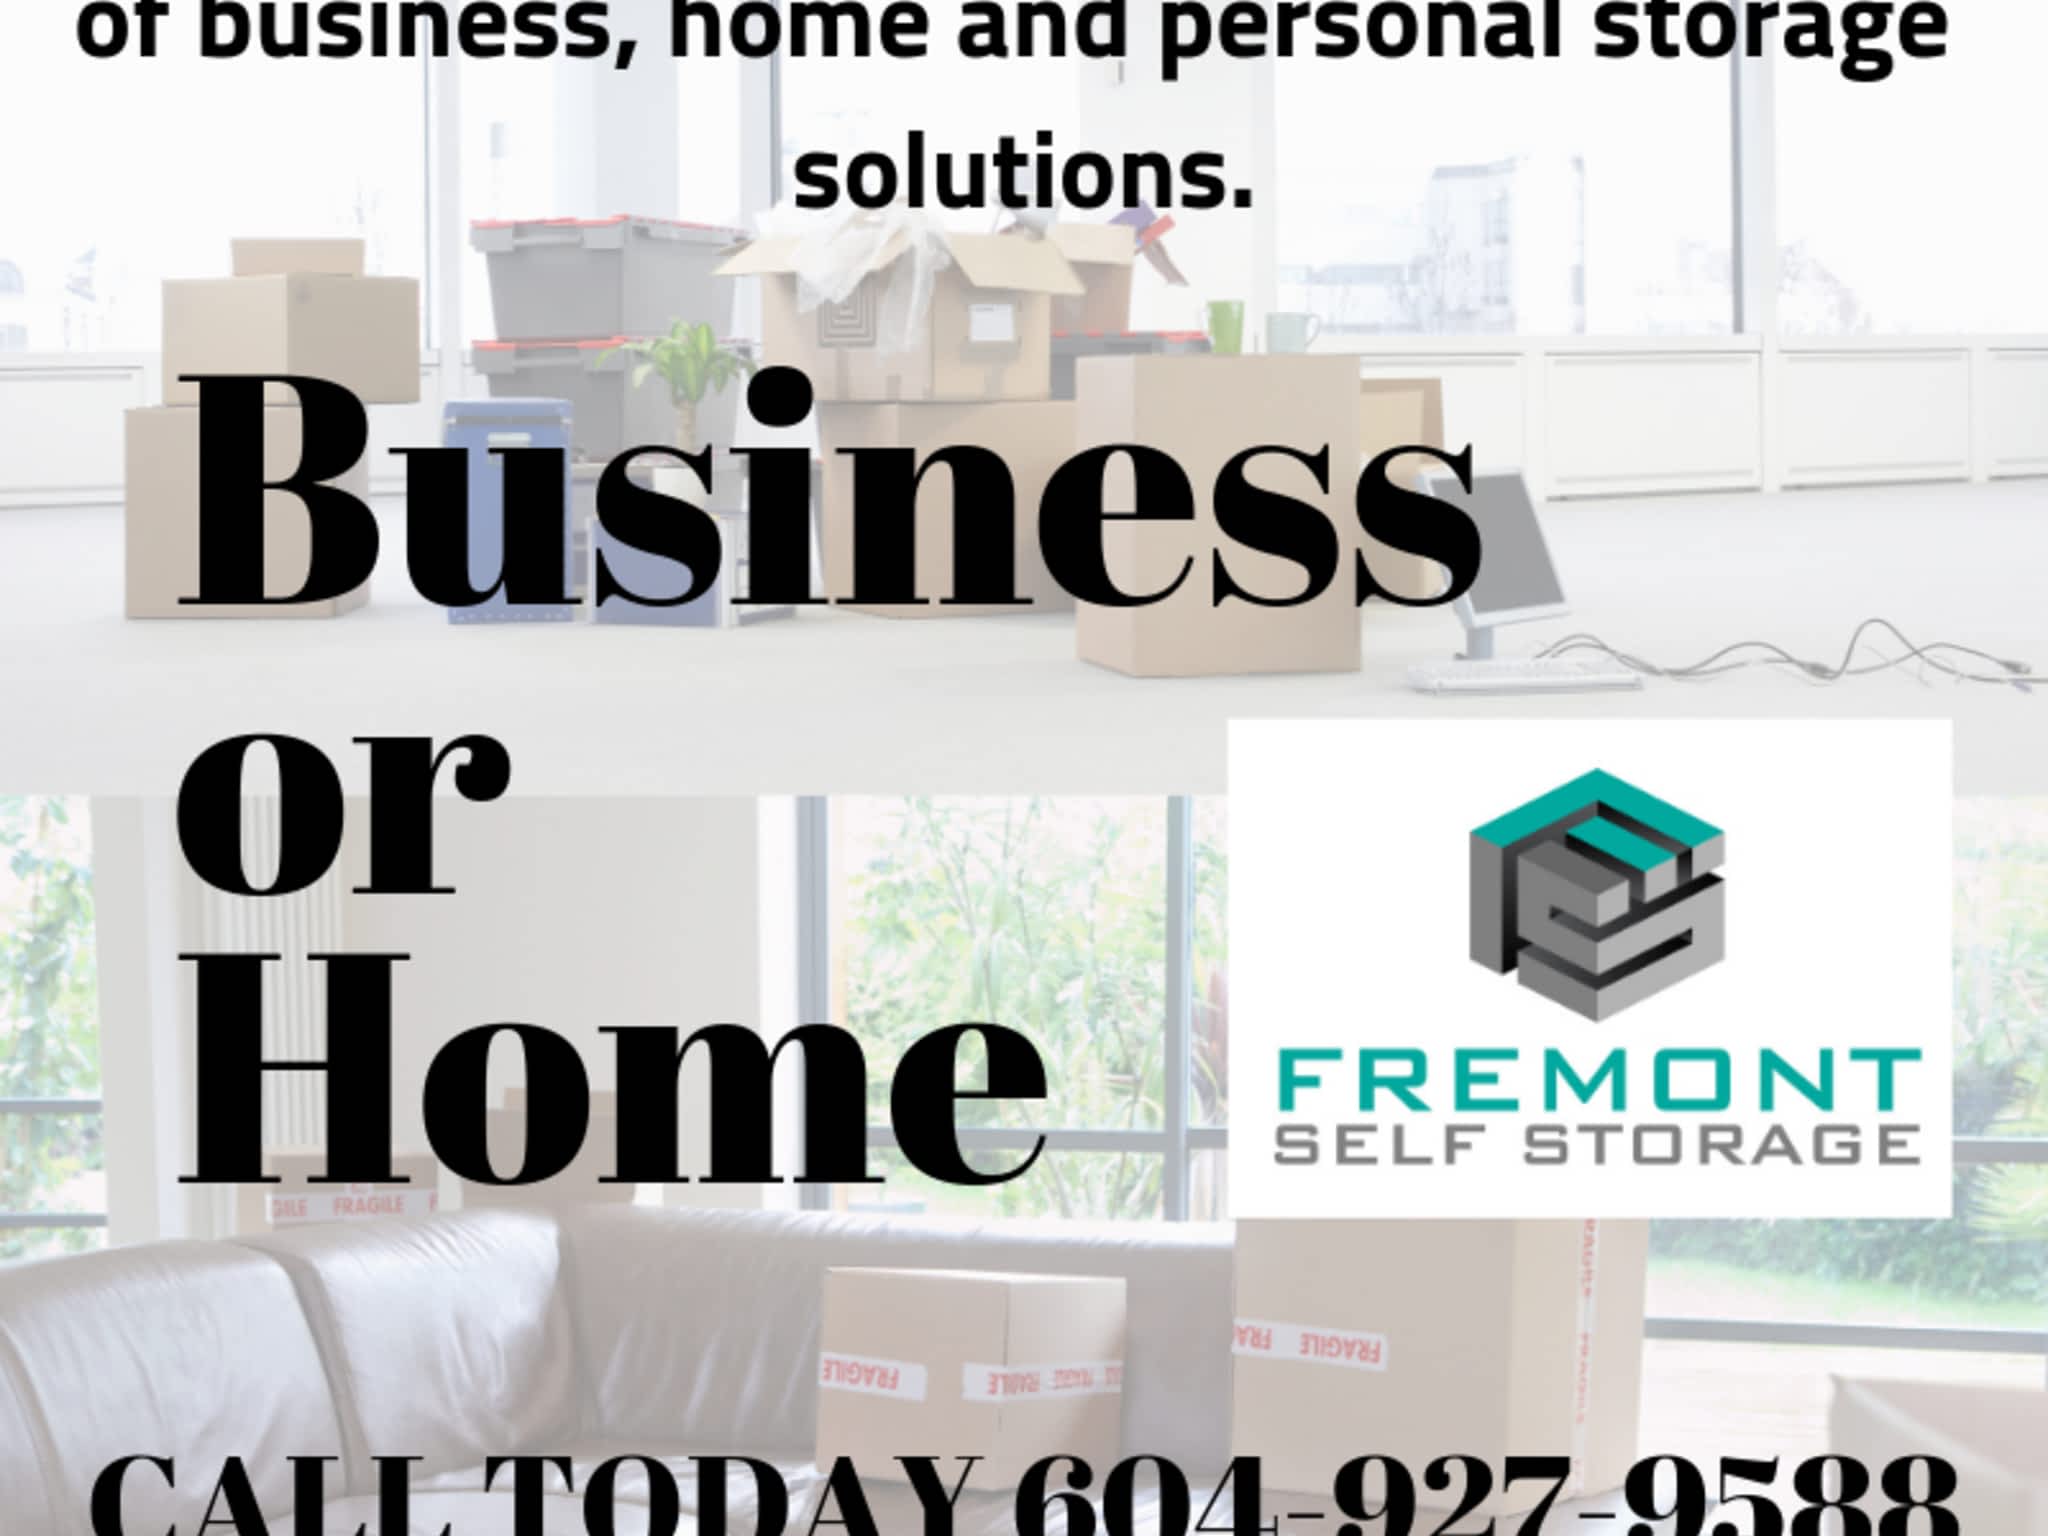 photo Fremont Self Storage Ltd